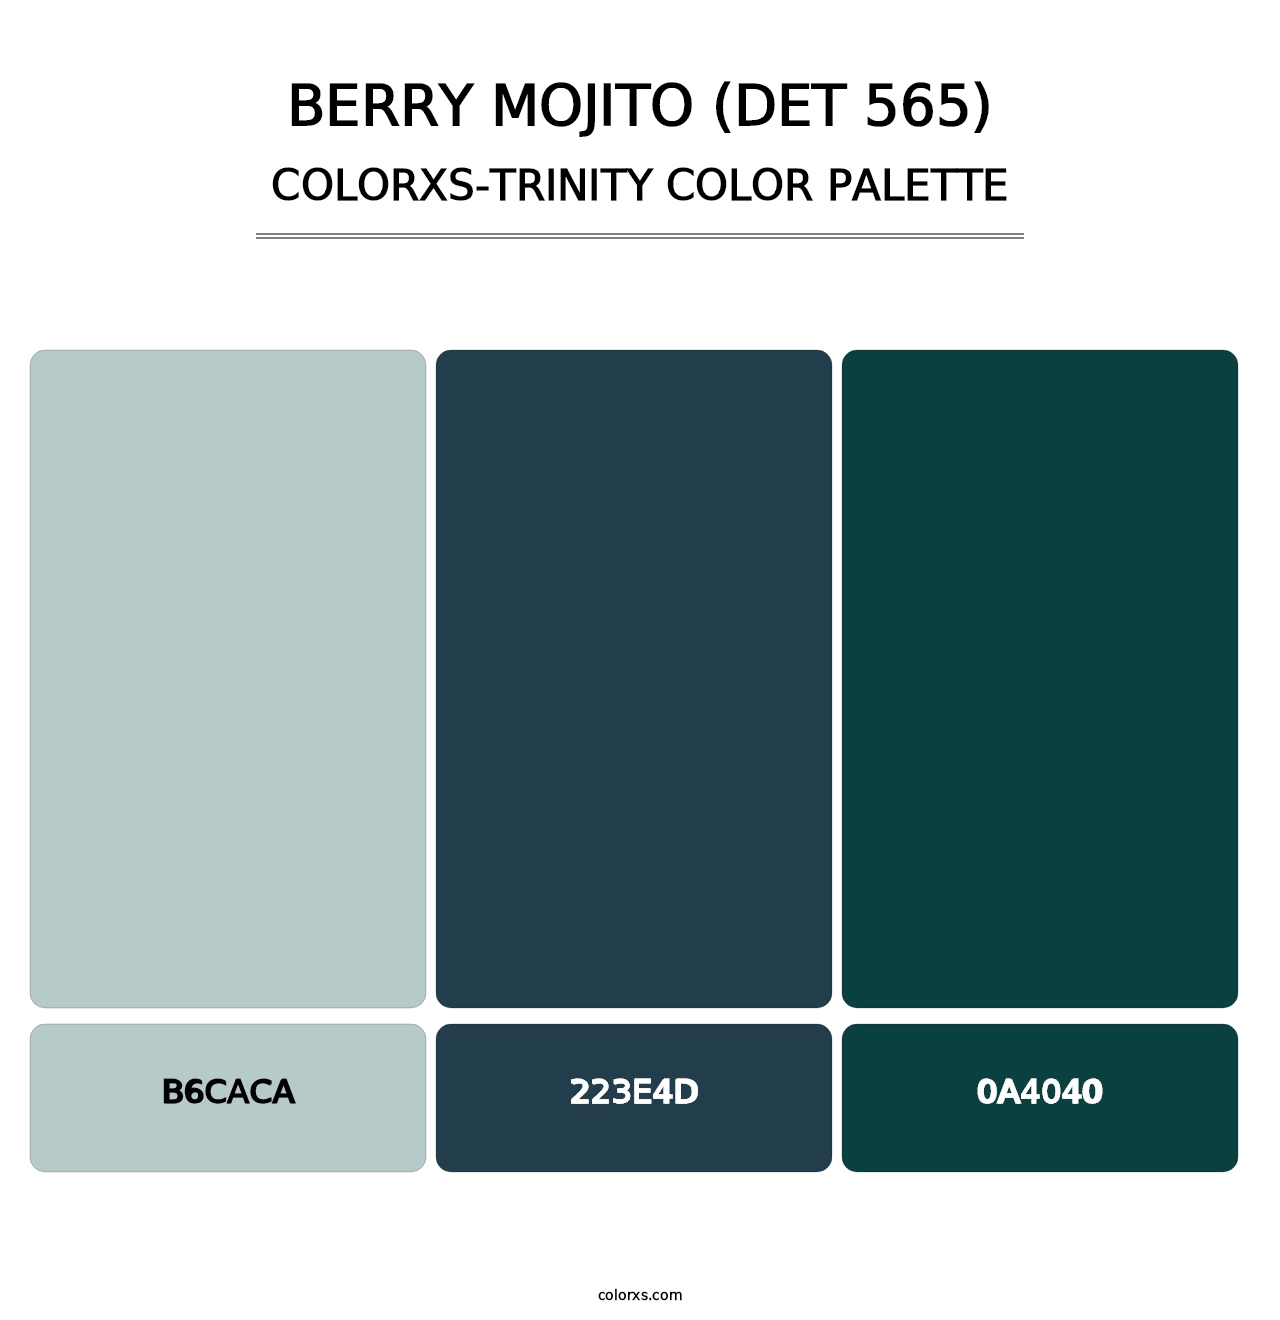 Berry Mojito (DET 565) - Colorxs Trinity Palette